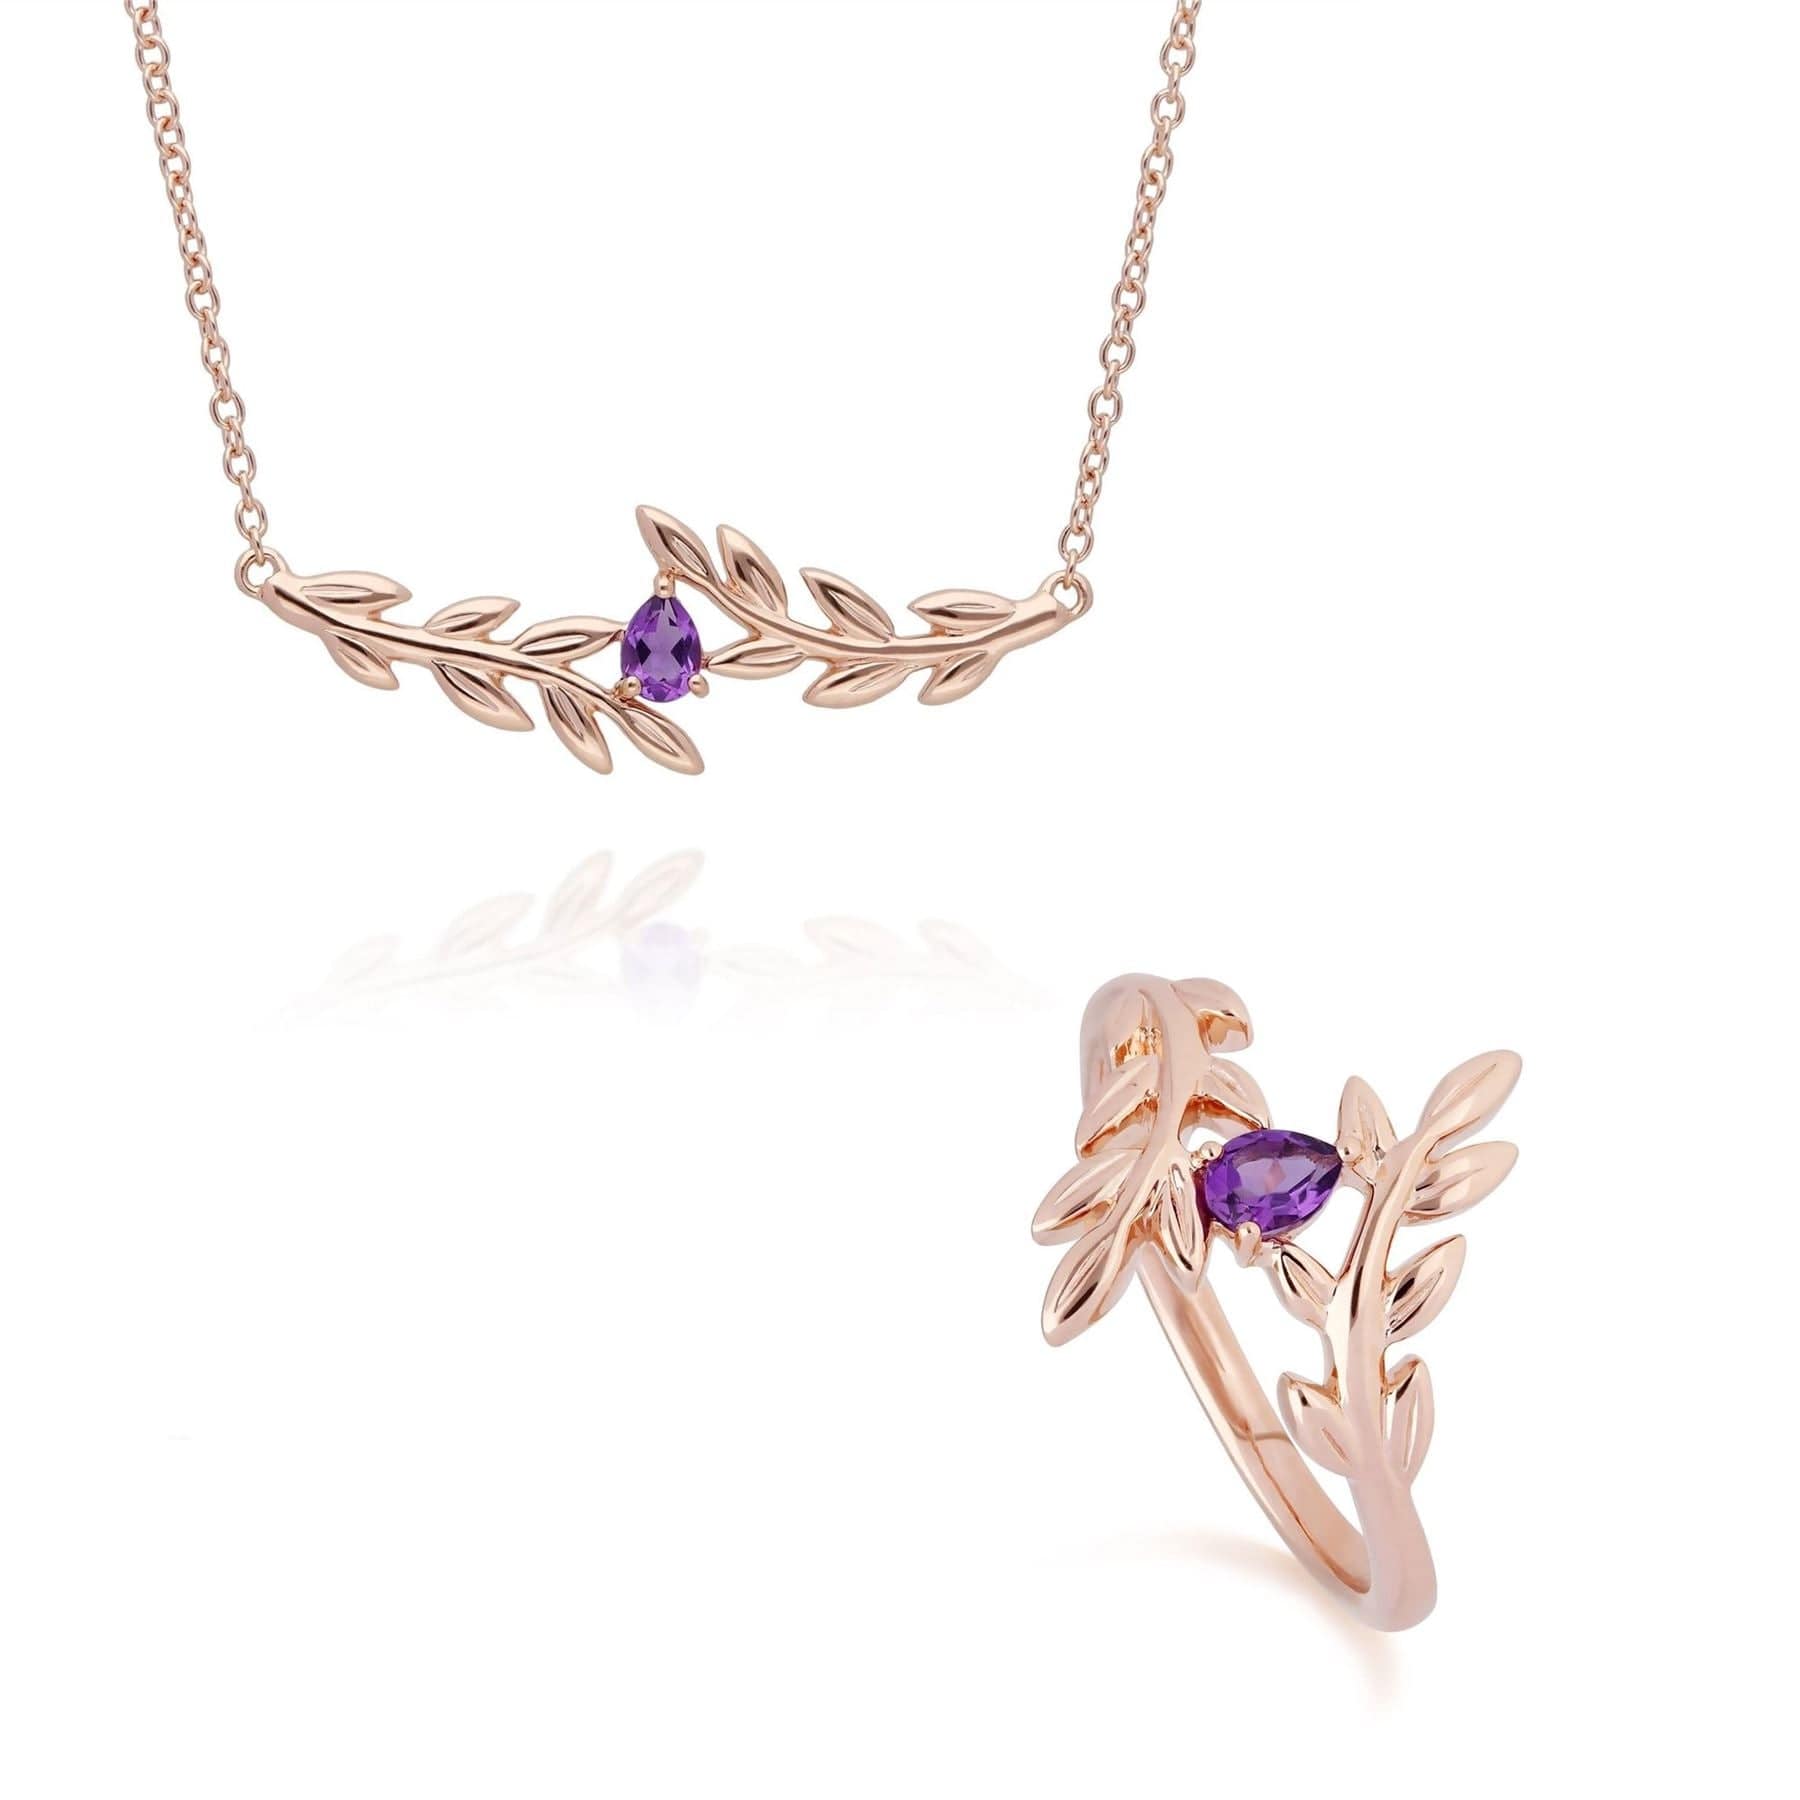 135N0364019-135R1862019 O Leaf Amethyst Necklace & Ring Set in 9ct Rose Gold 1